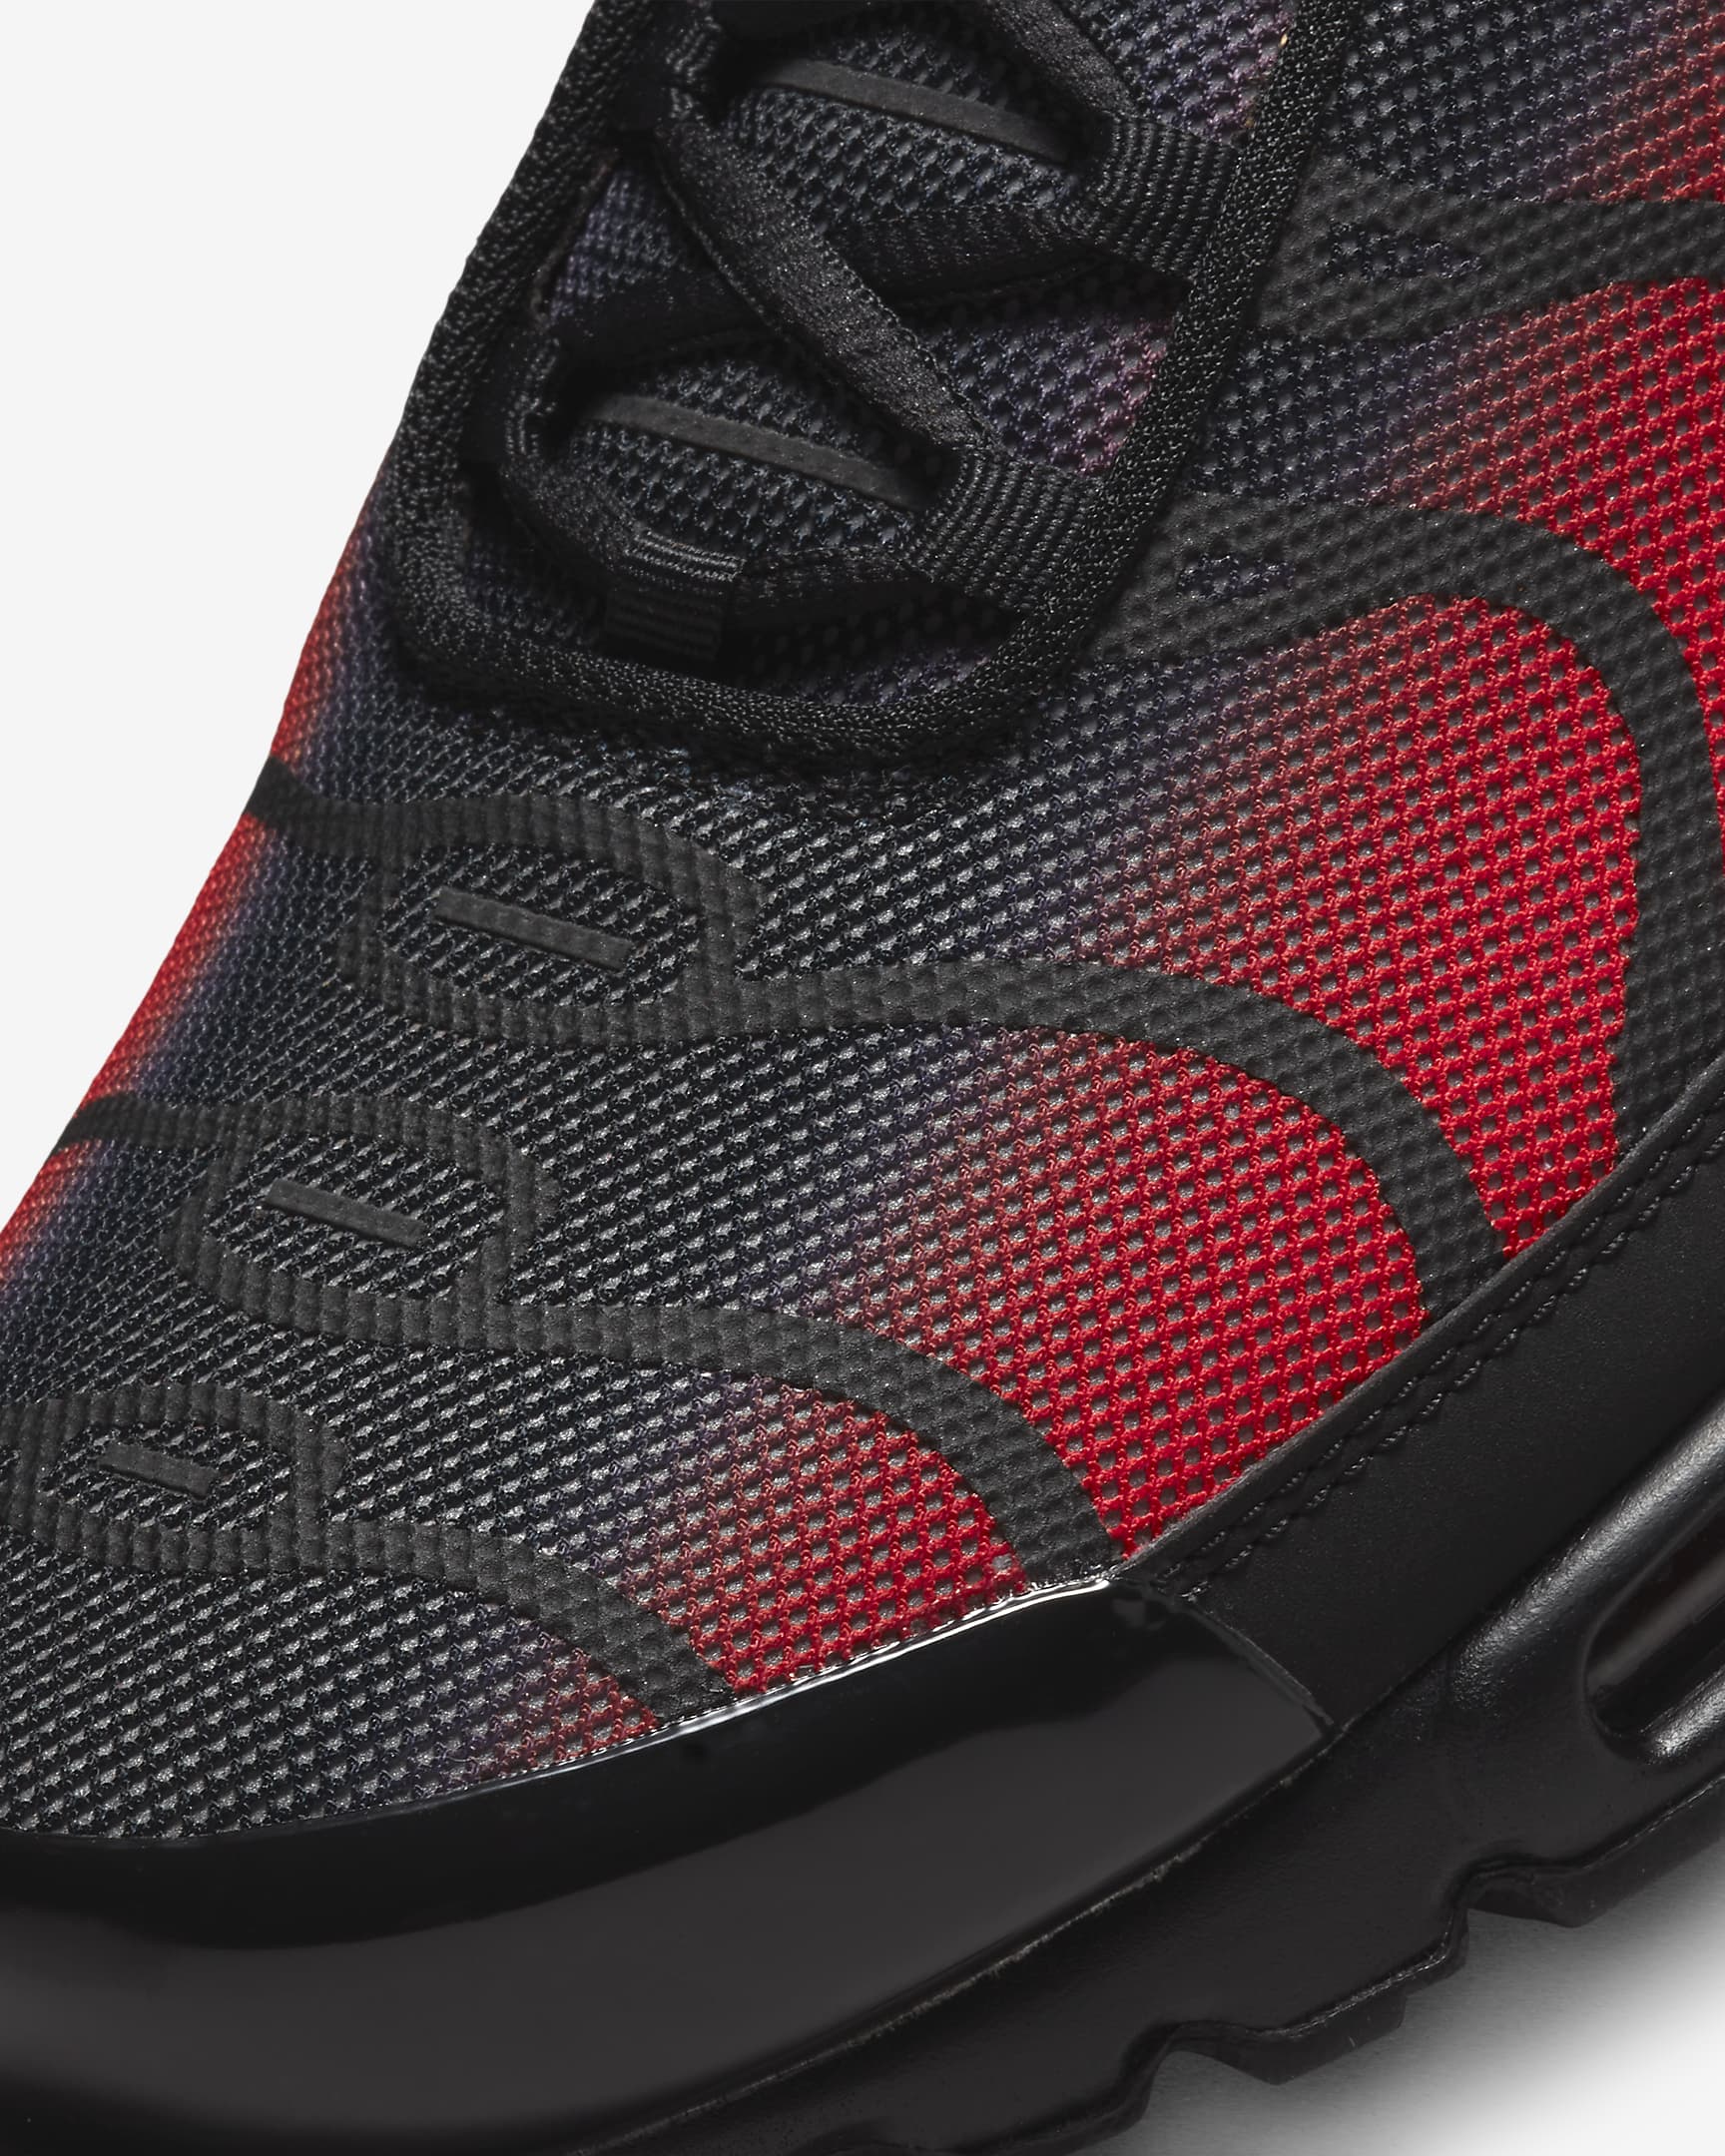 Nike Air Max Plus Men's Shoes - University Red/Black